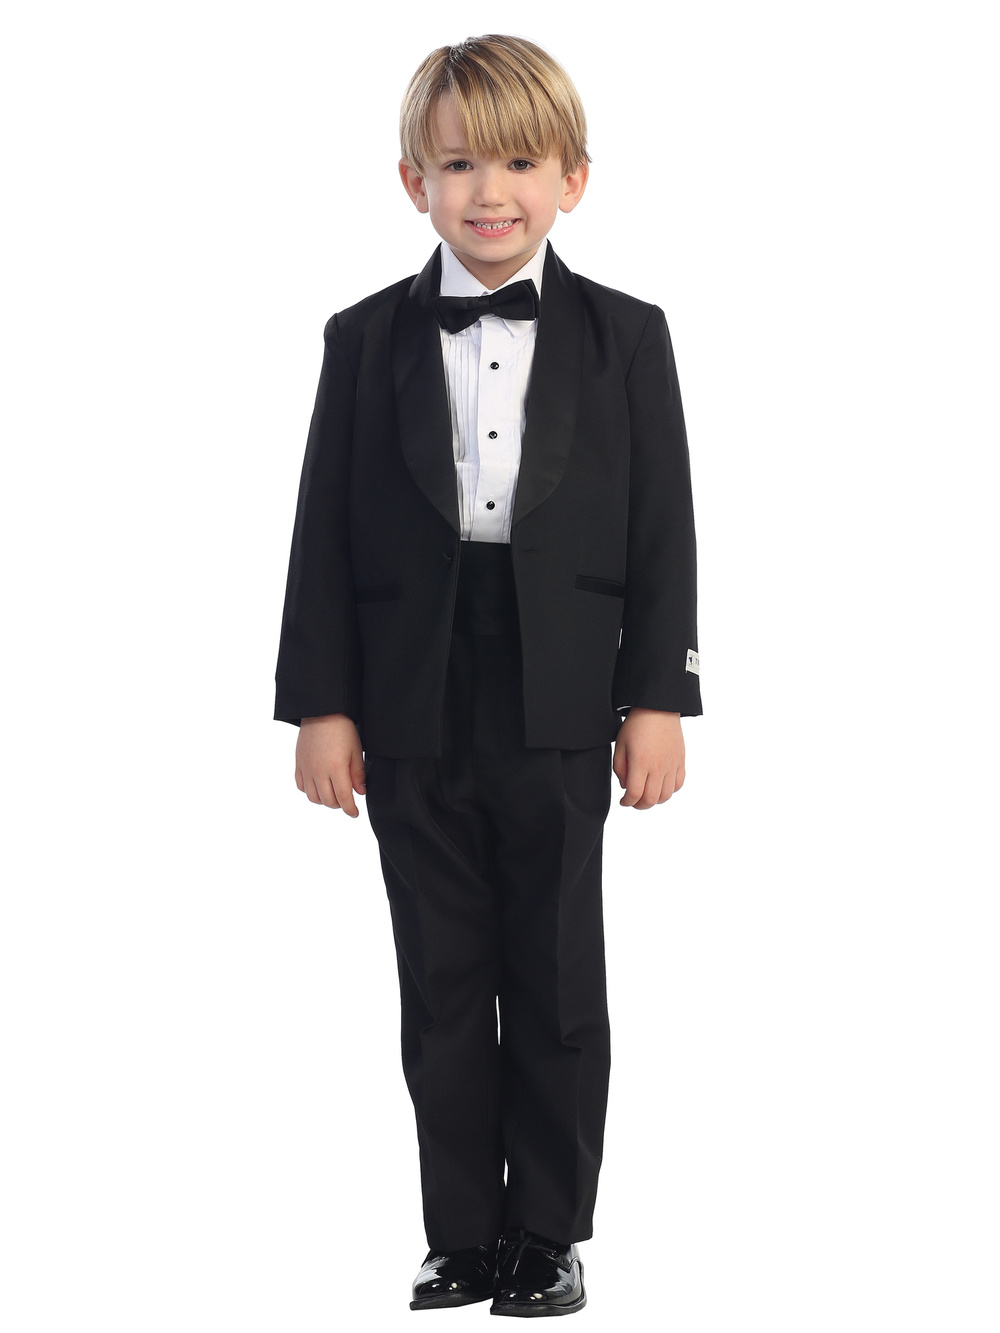 Baby Infant Toddler Kid Teen Boy Wedding Formal Satin Tuxedo Black Suit sz S-18 